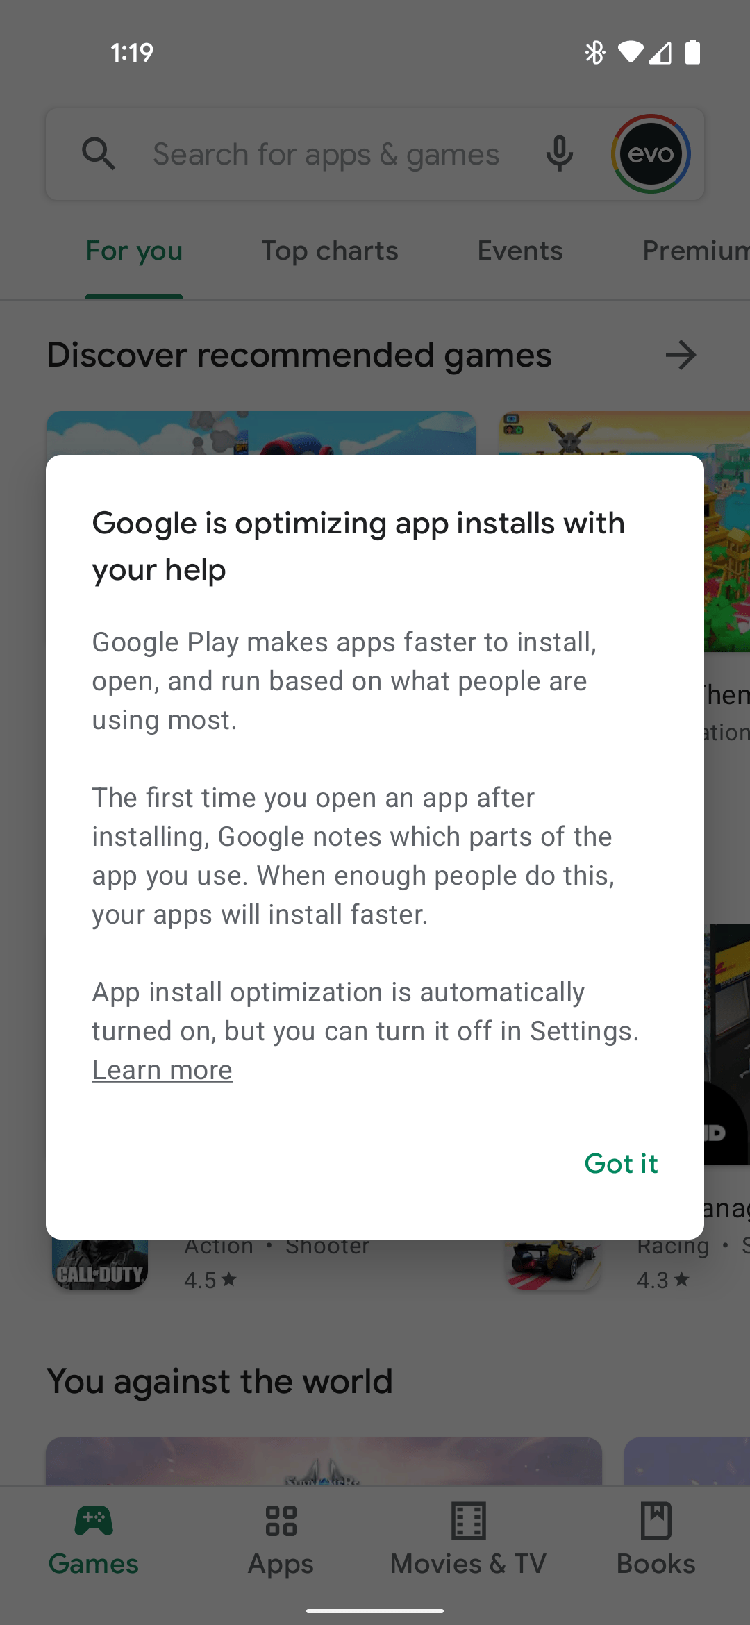 Google Play Store App Install Optimization